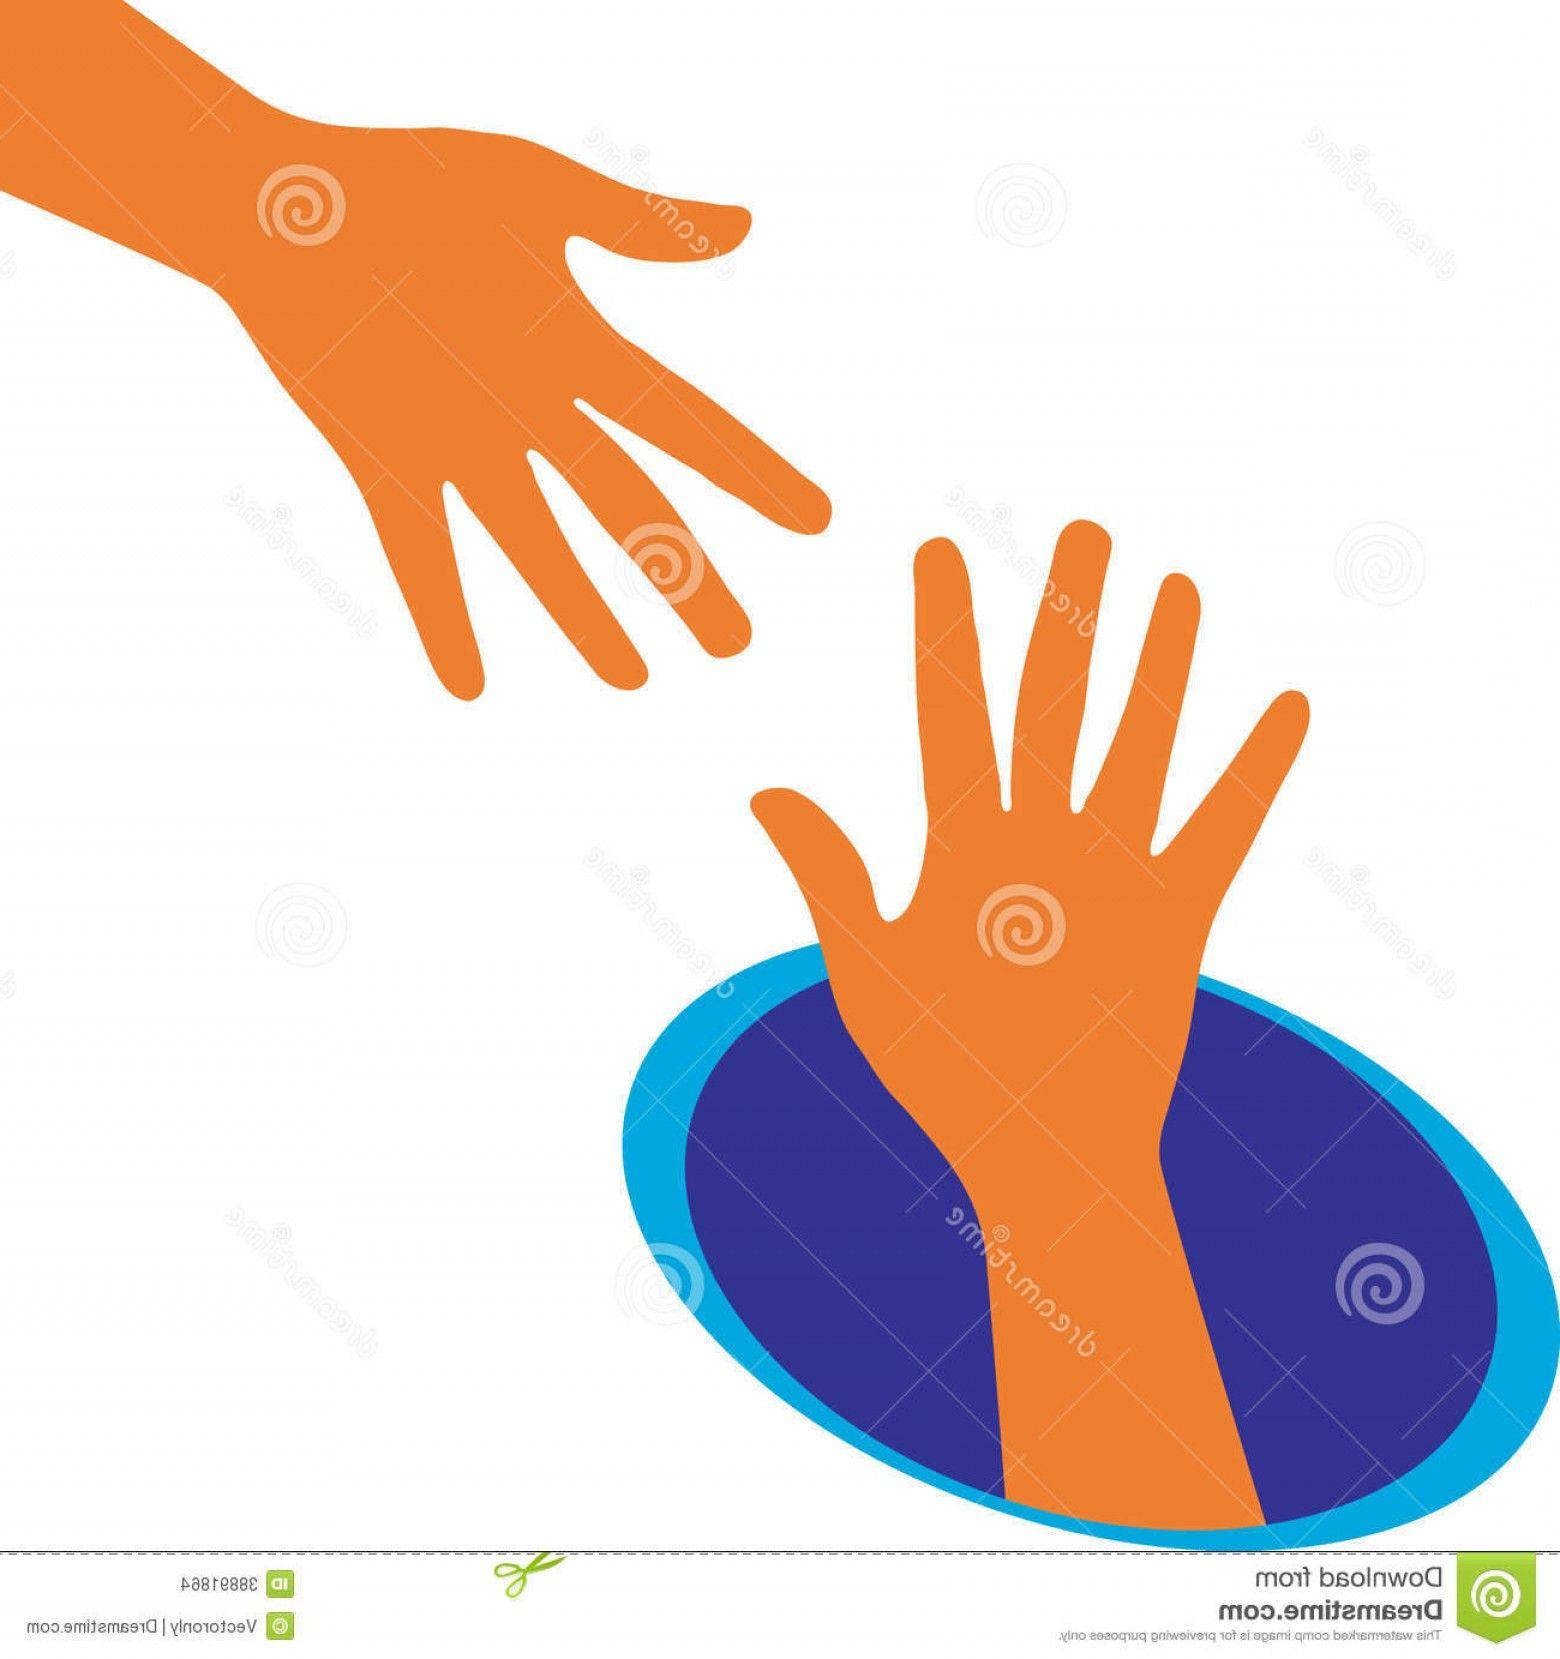 Orange Hands Logo - Stock Image Helping Hand Vector Illustration Hands Logo Image